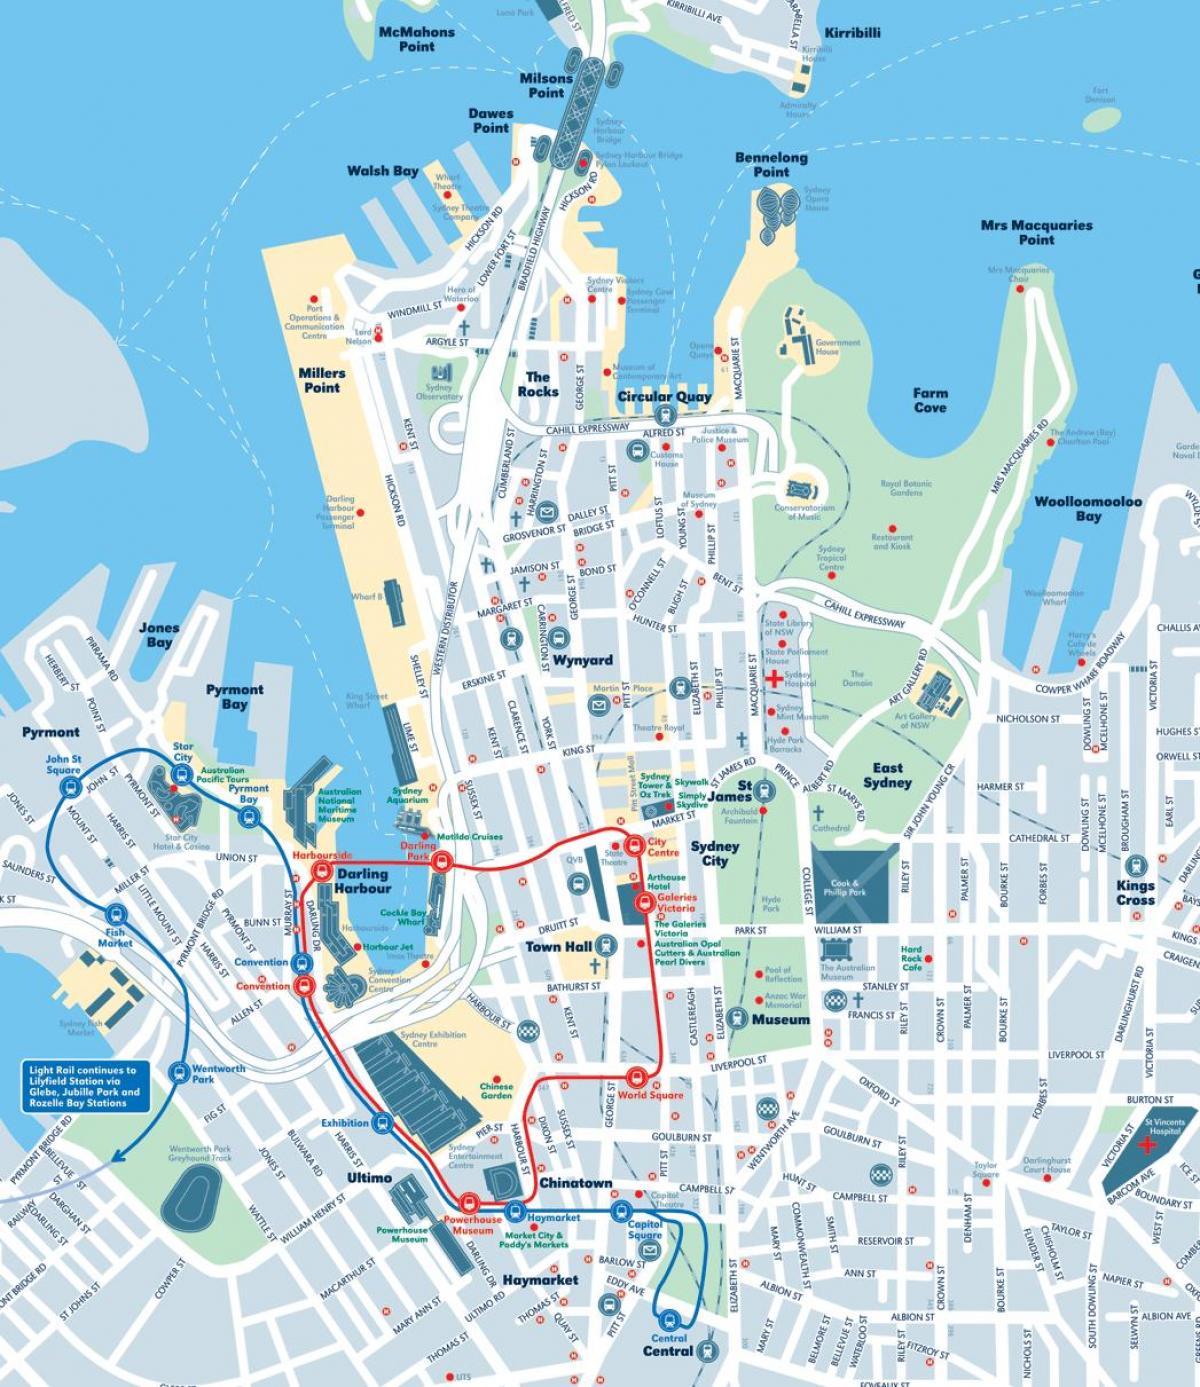 map of sydney city